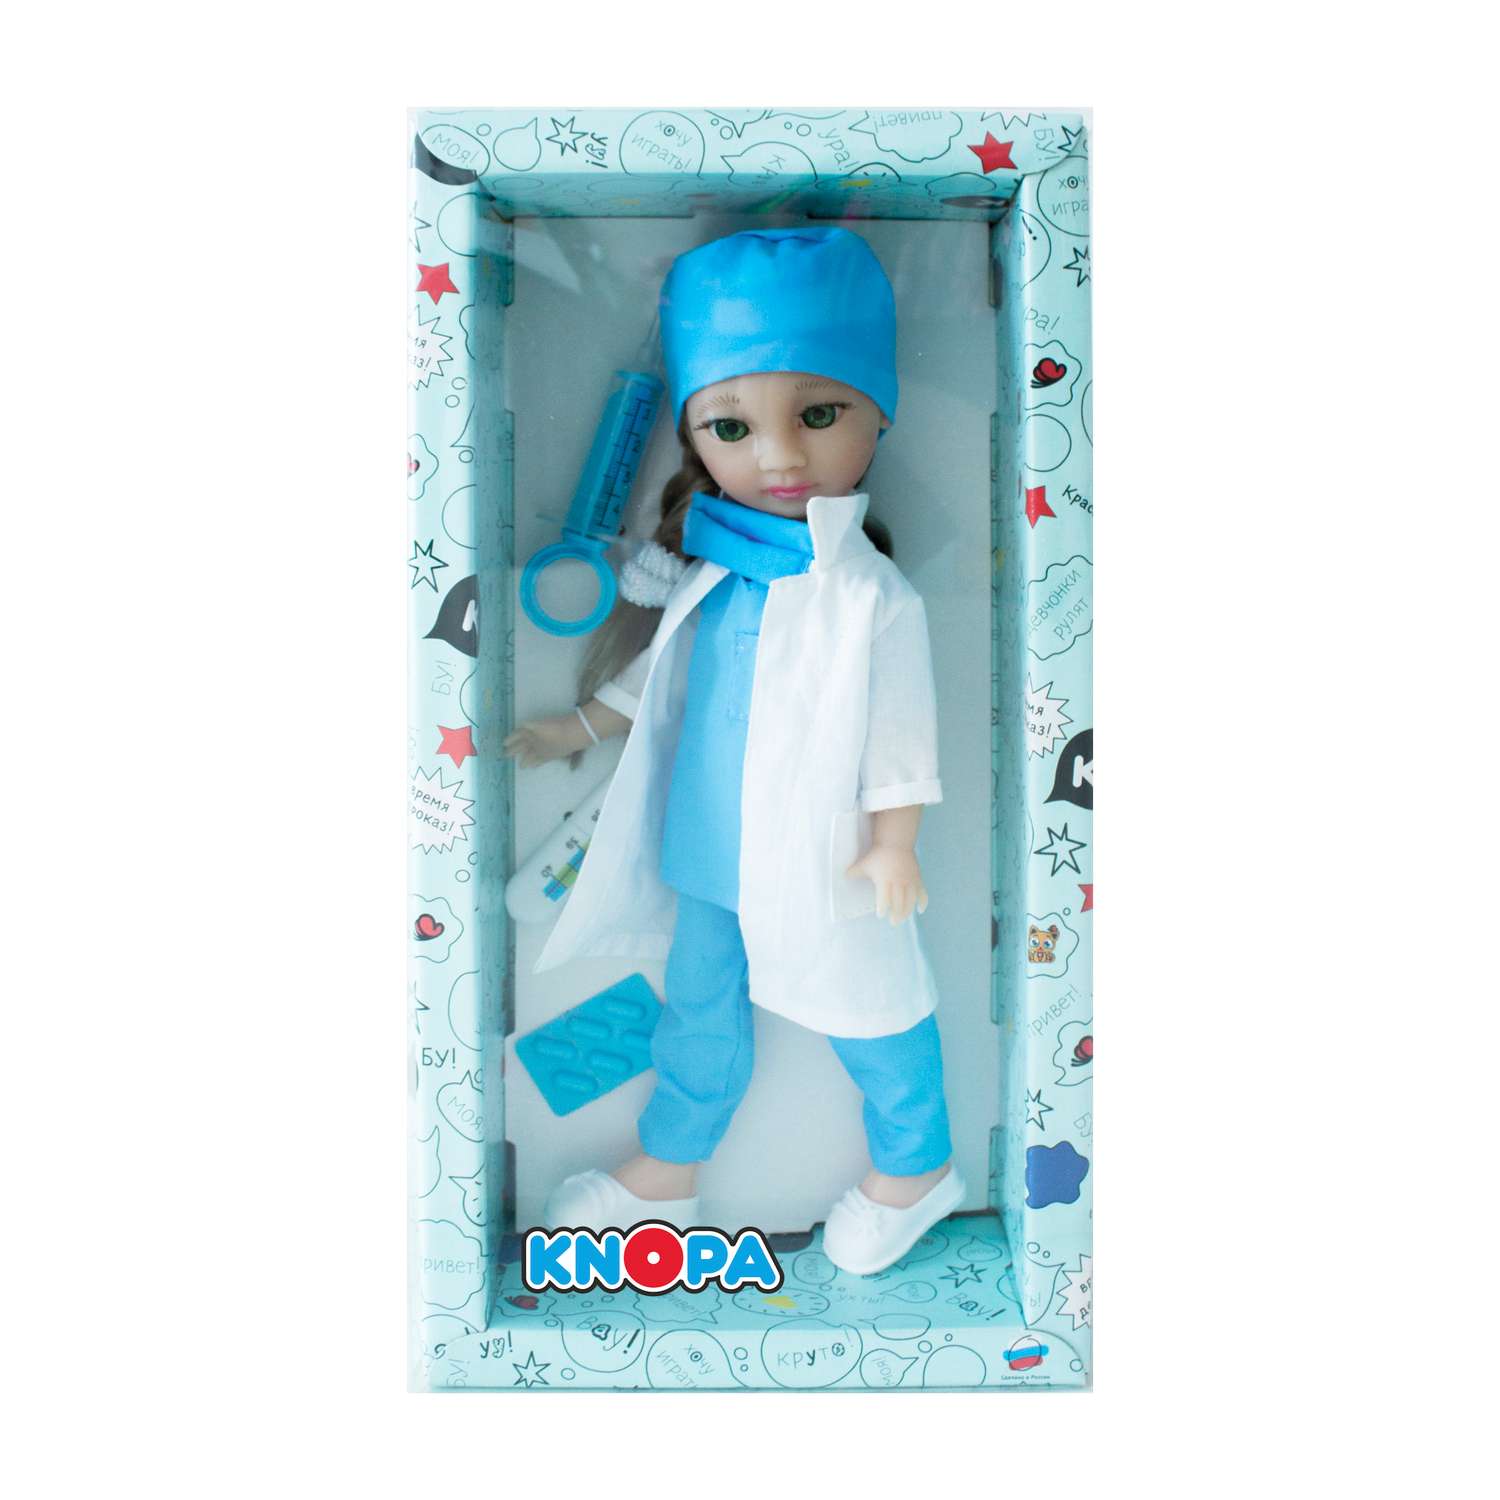 Кукла KNOPA Доктор Мишель 85021 - фото 2